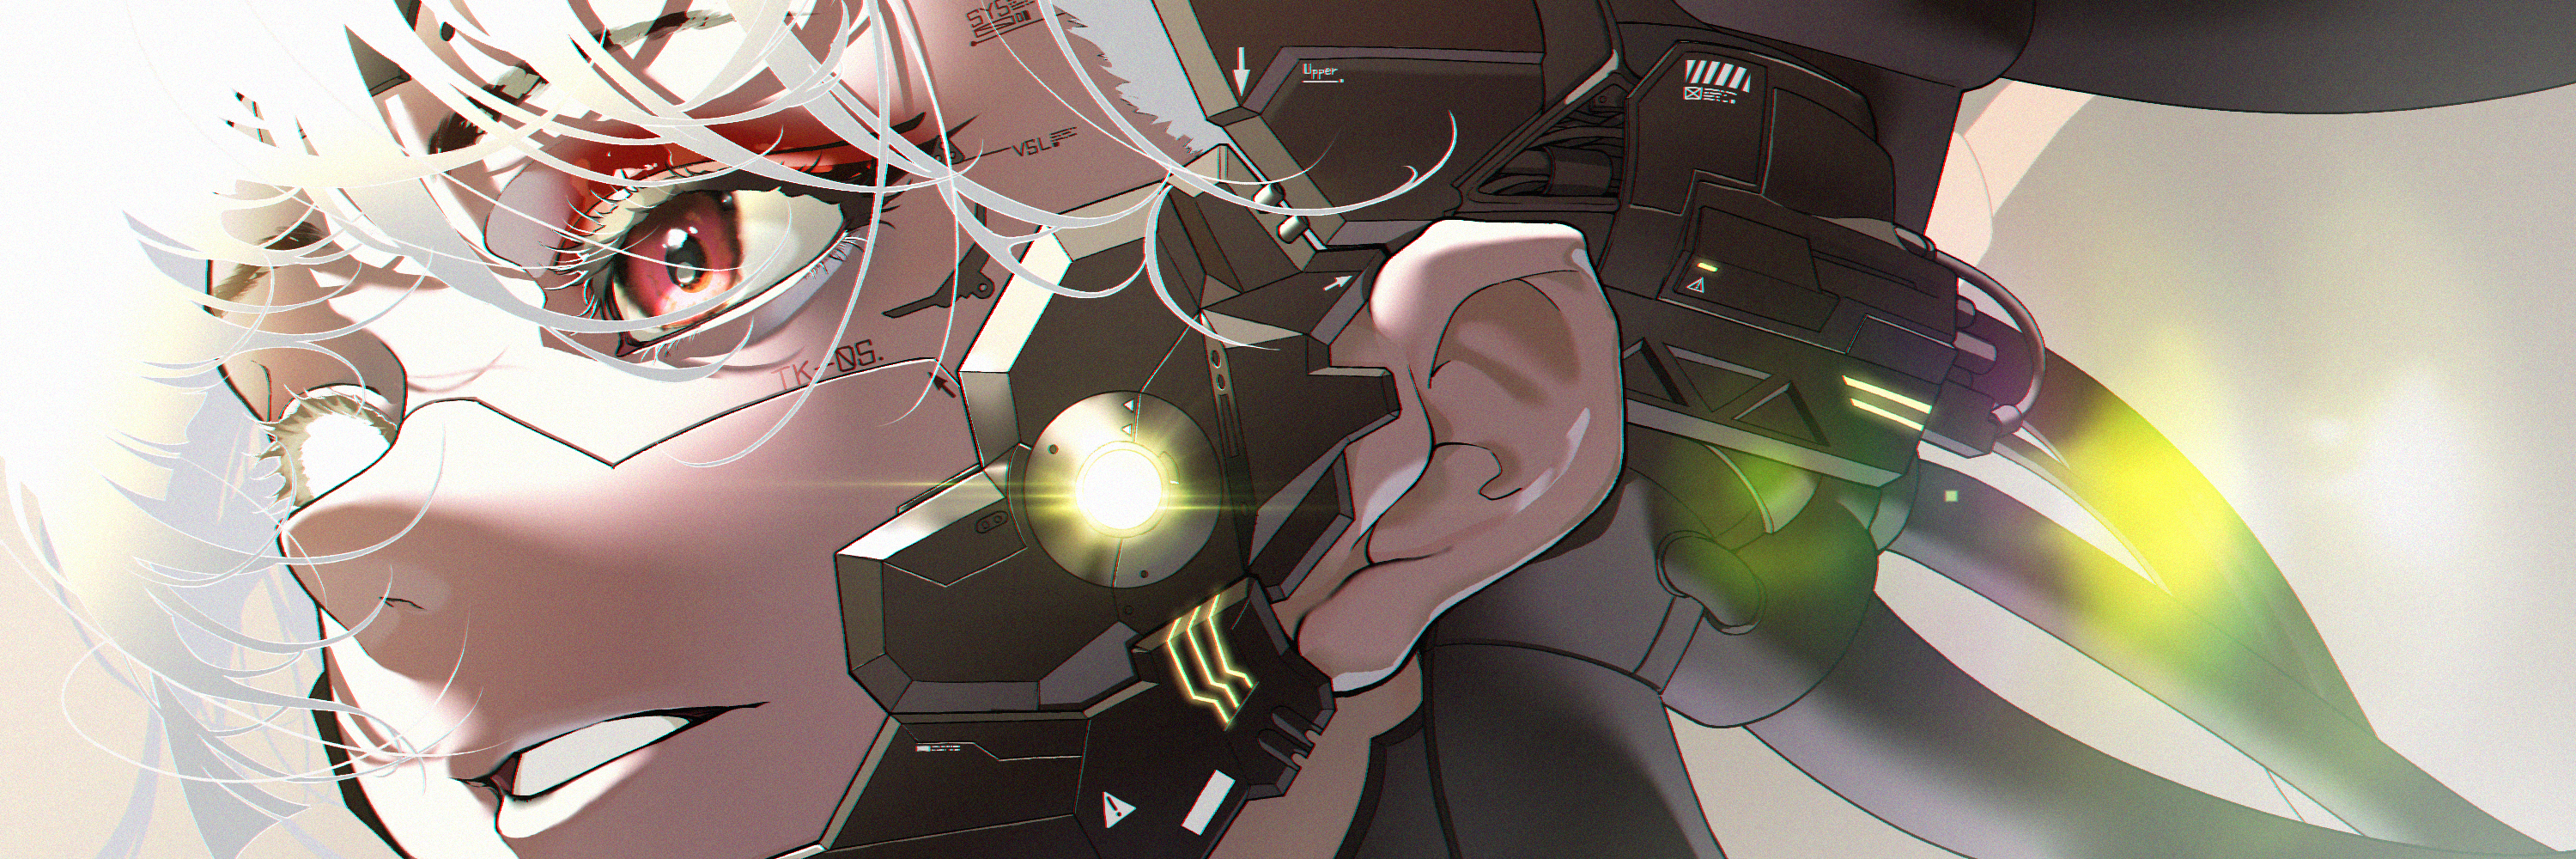 Digital Art Artwork Illustration Women Anime Cyborg Closeup Robot White Hair Tech Heterochromia Anim 3000x1000